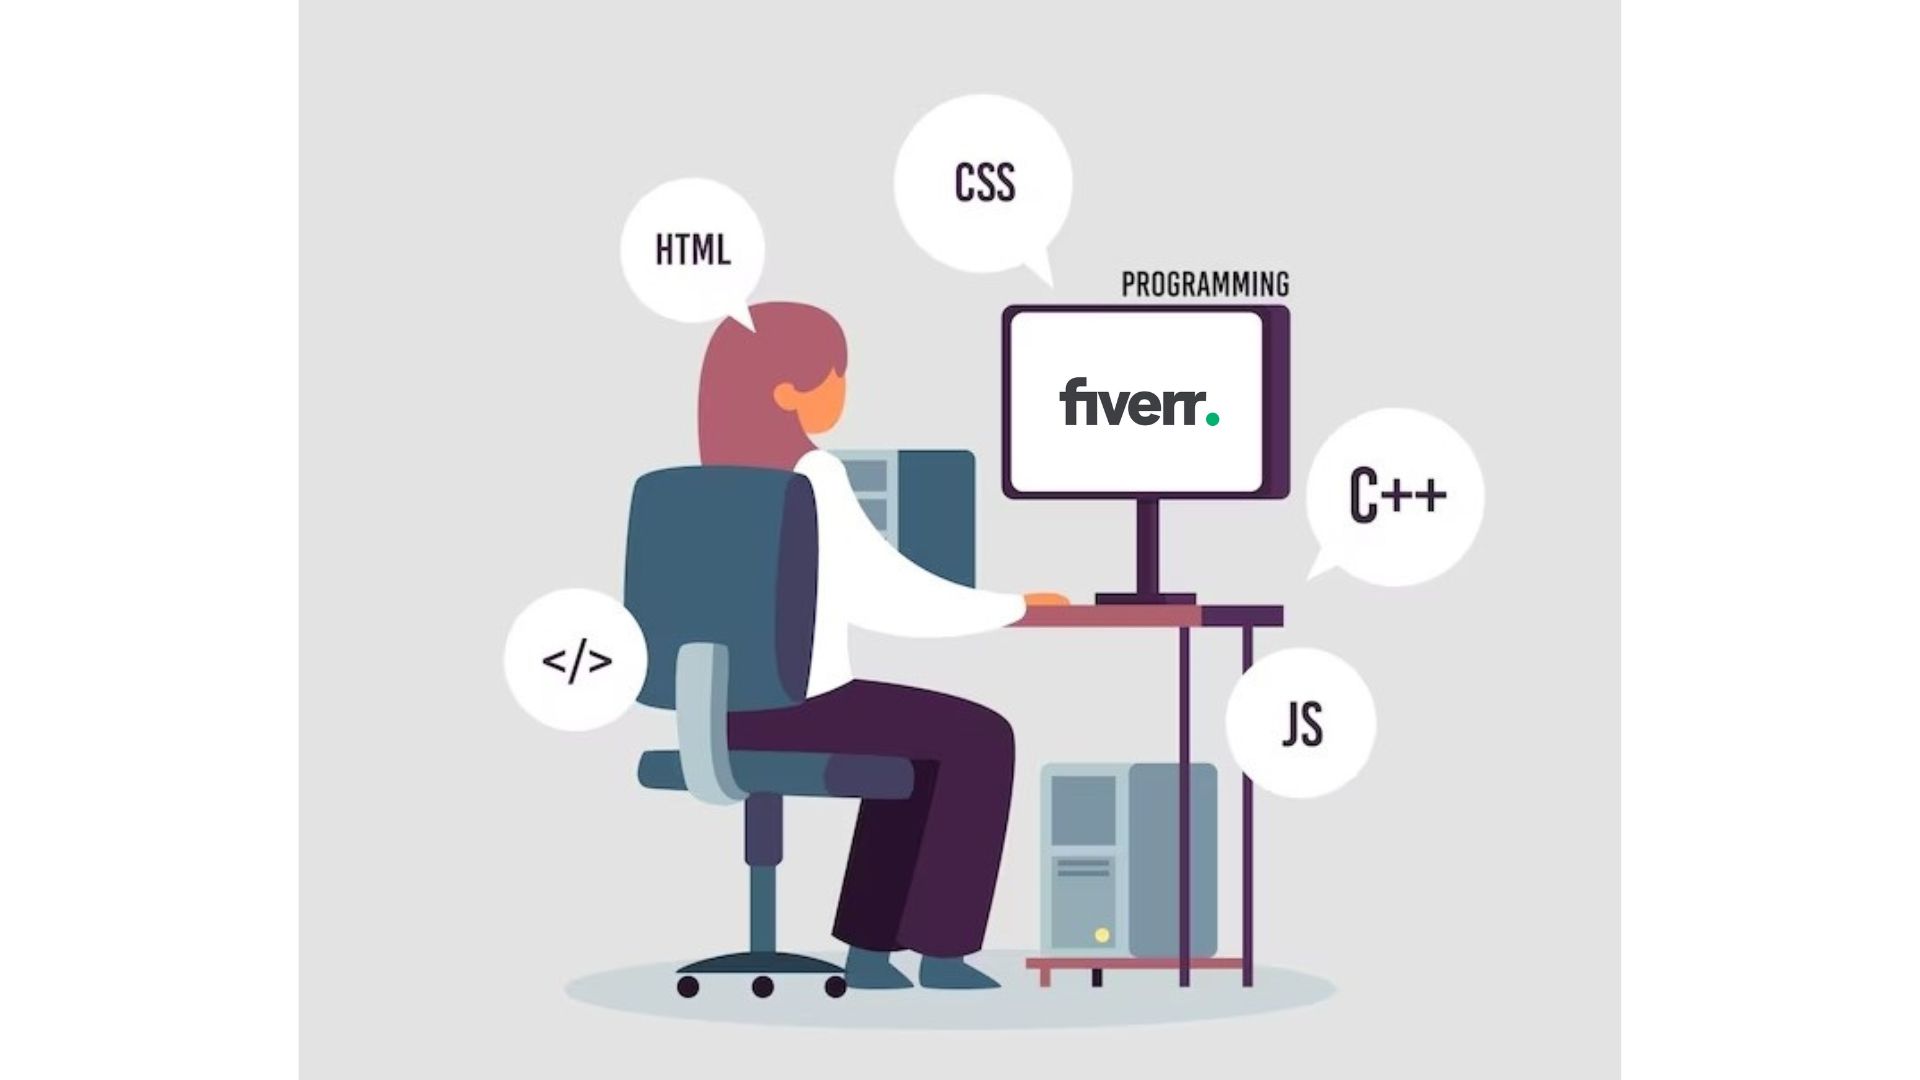 Fiverr good for web development